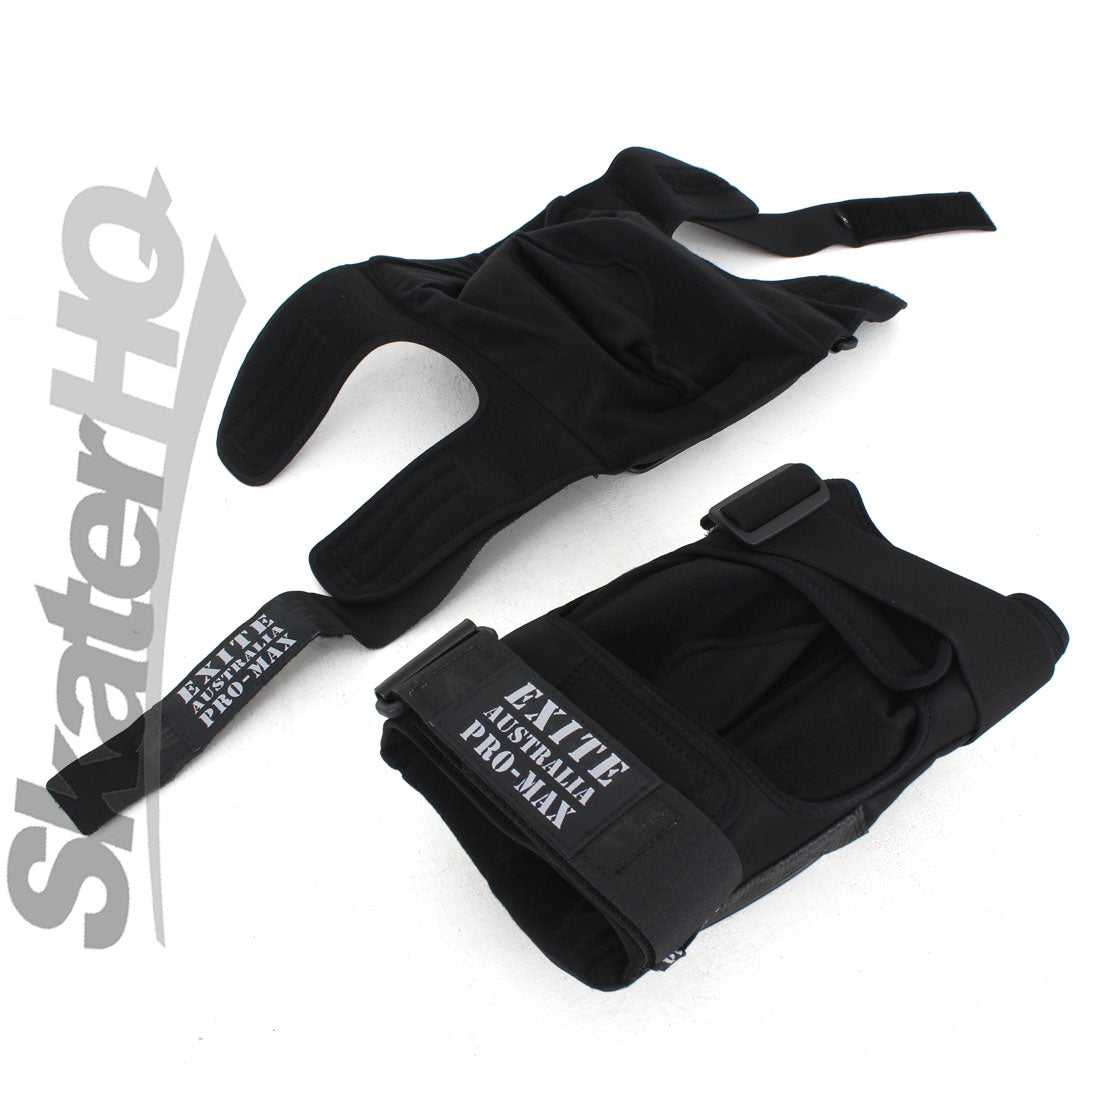 Exite Pro Max Modular Knee Pads - Medium Protective Gear